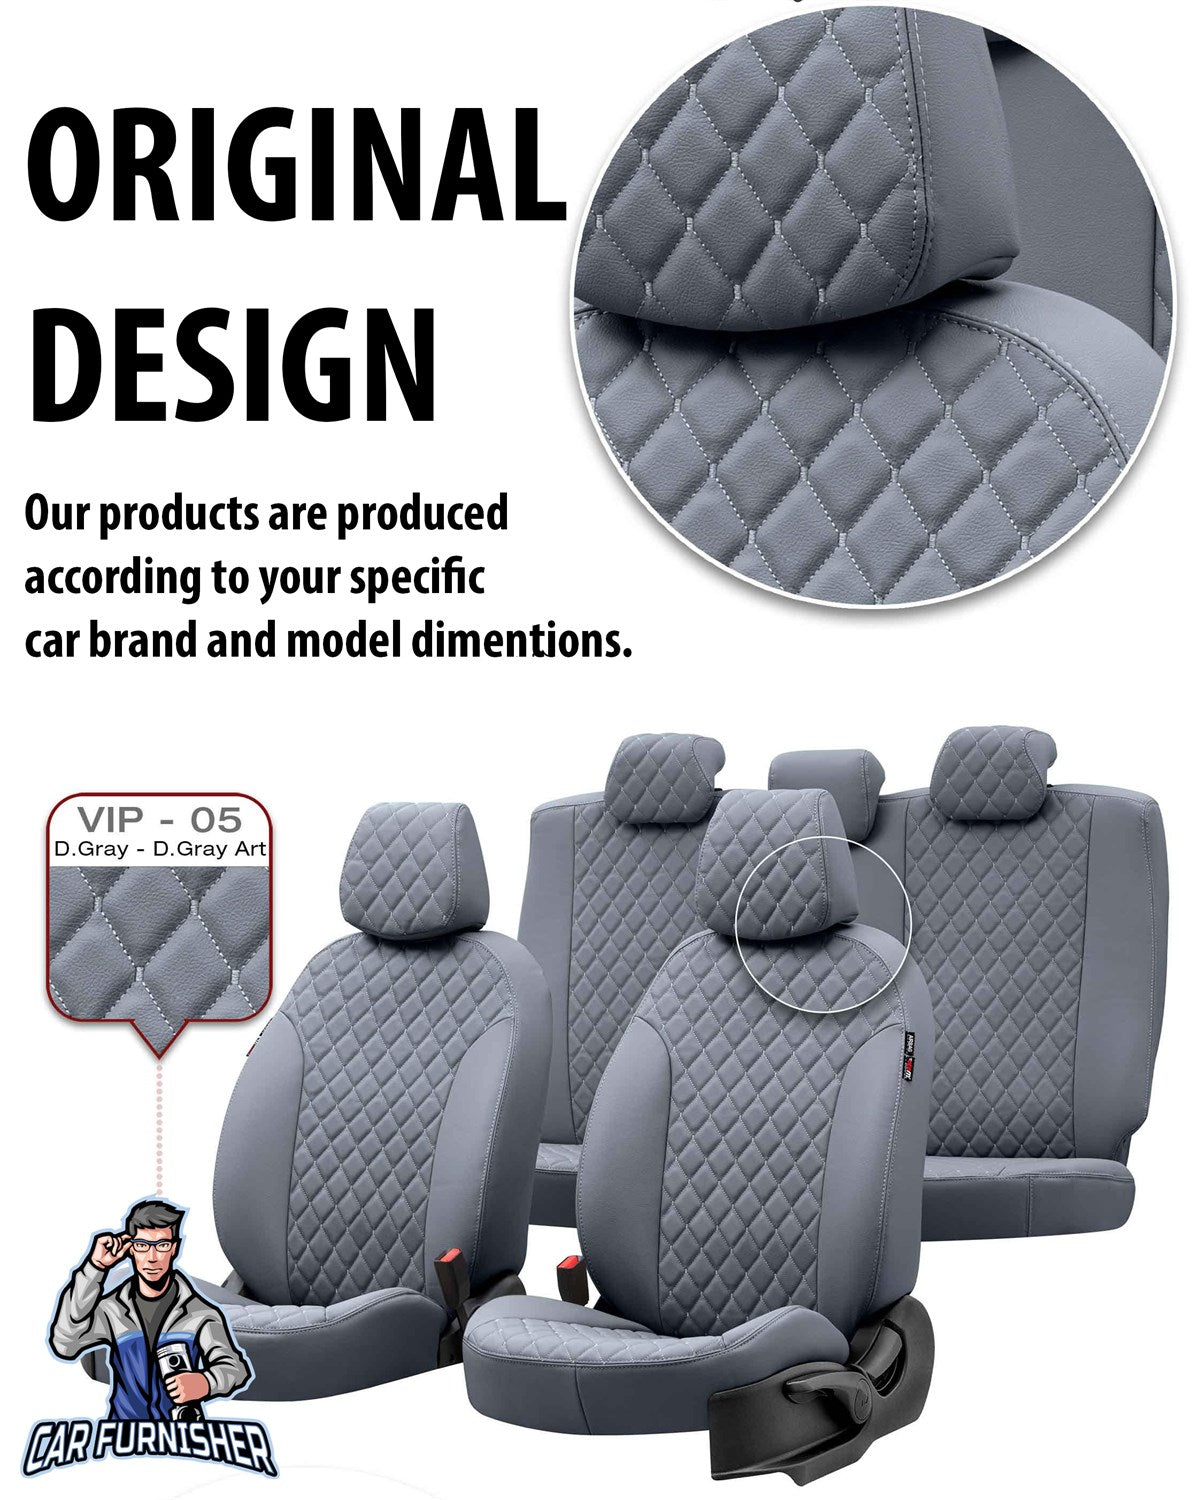 Chevrolet Aveo Seat Cover Madrid Leather Design Dark Gray Leather